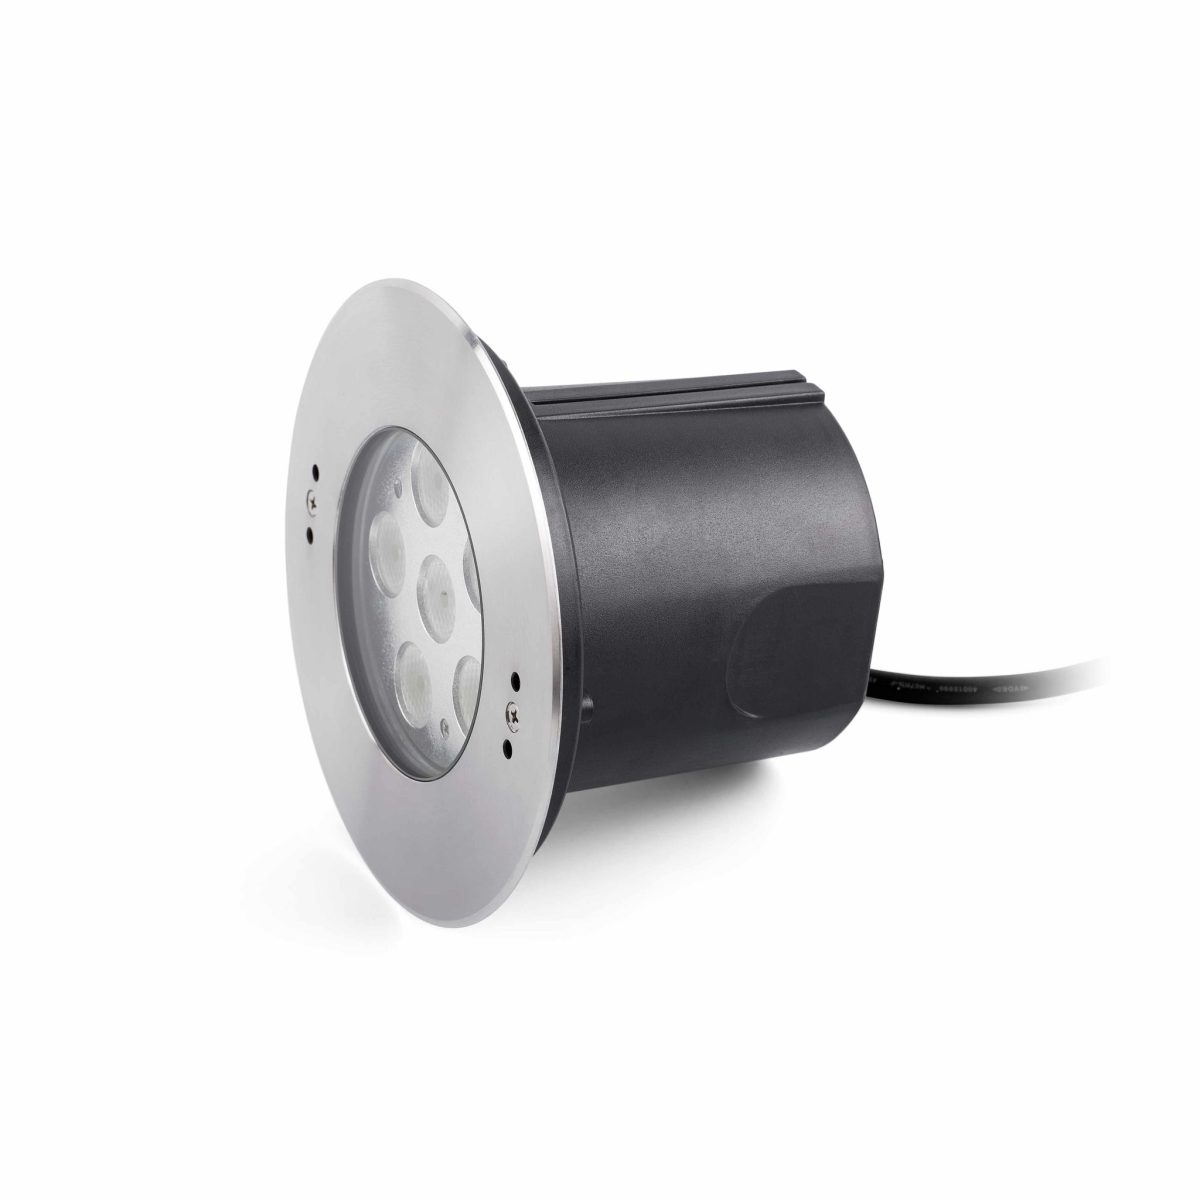 EDEL LED Foco sumergible de Faro. Medidas: Ø 180 x L 180 x A 180 x F 120 mm. Color: Acero